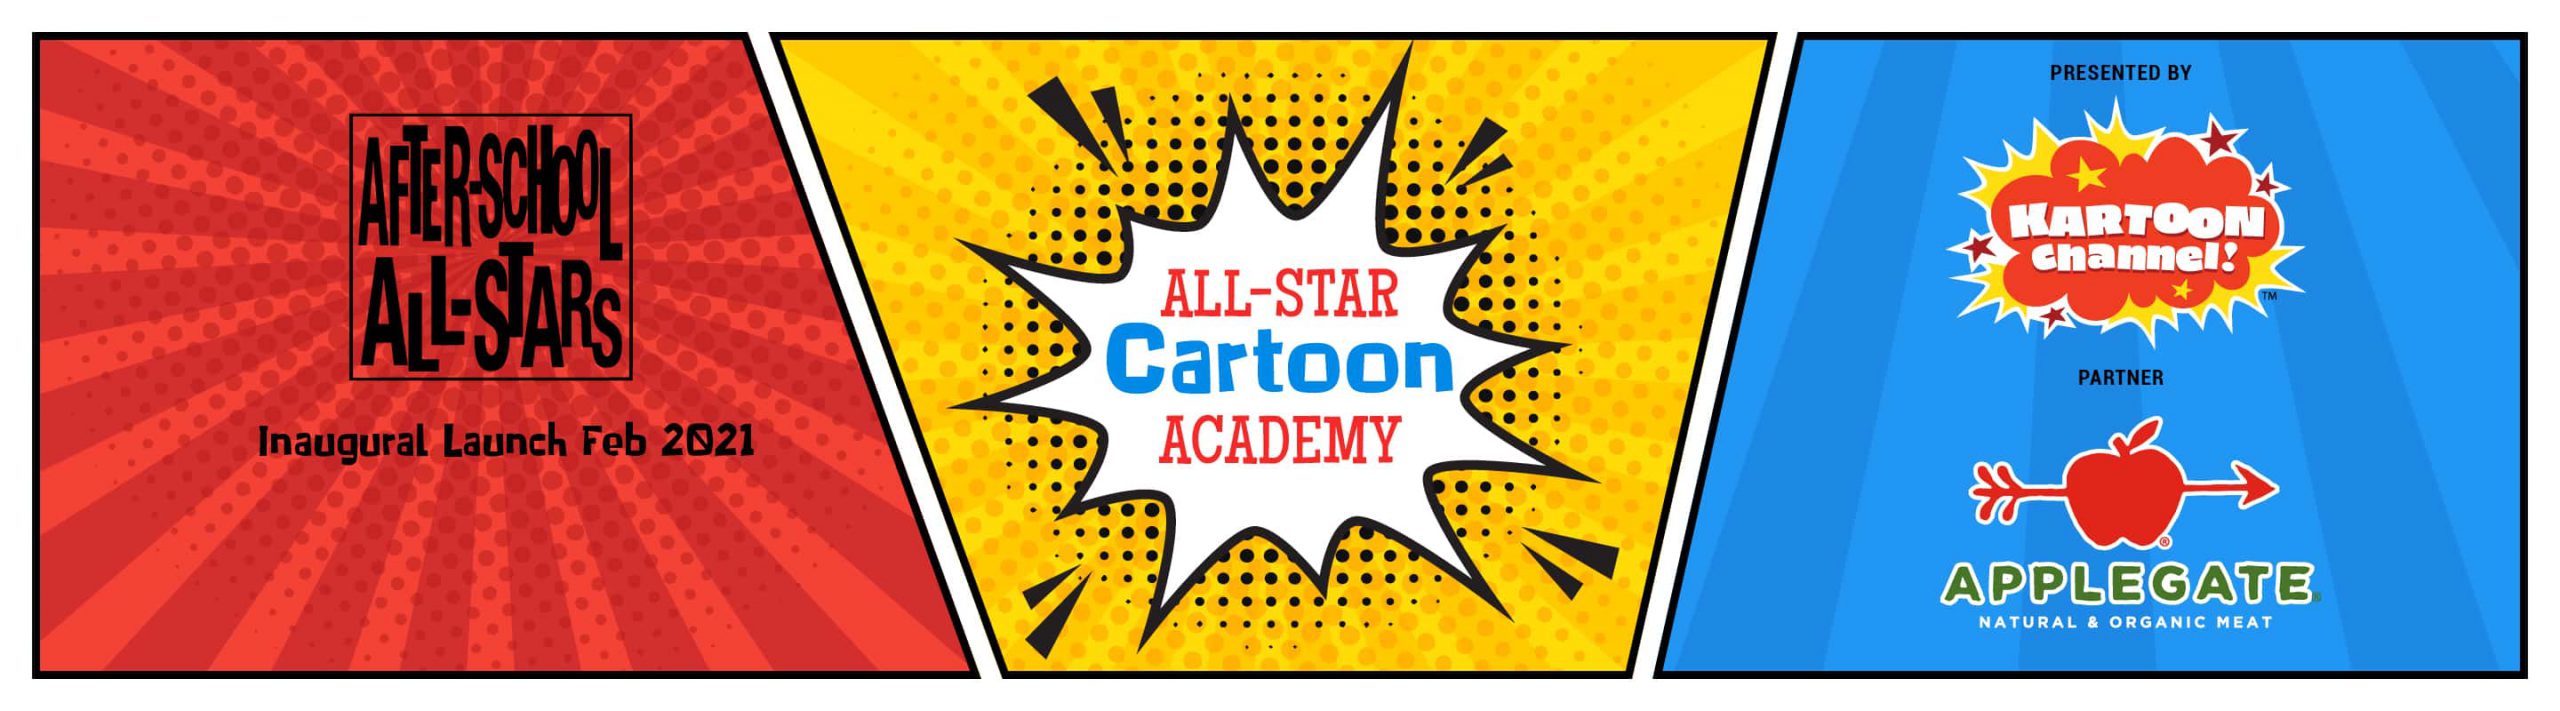 Cartoon Academy page header